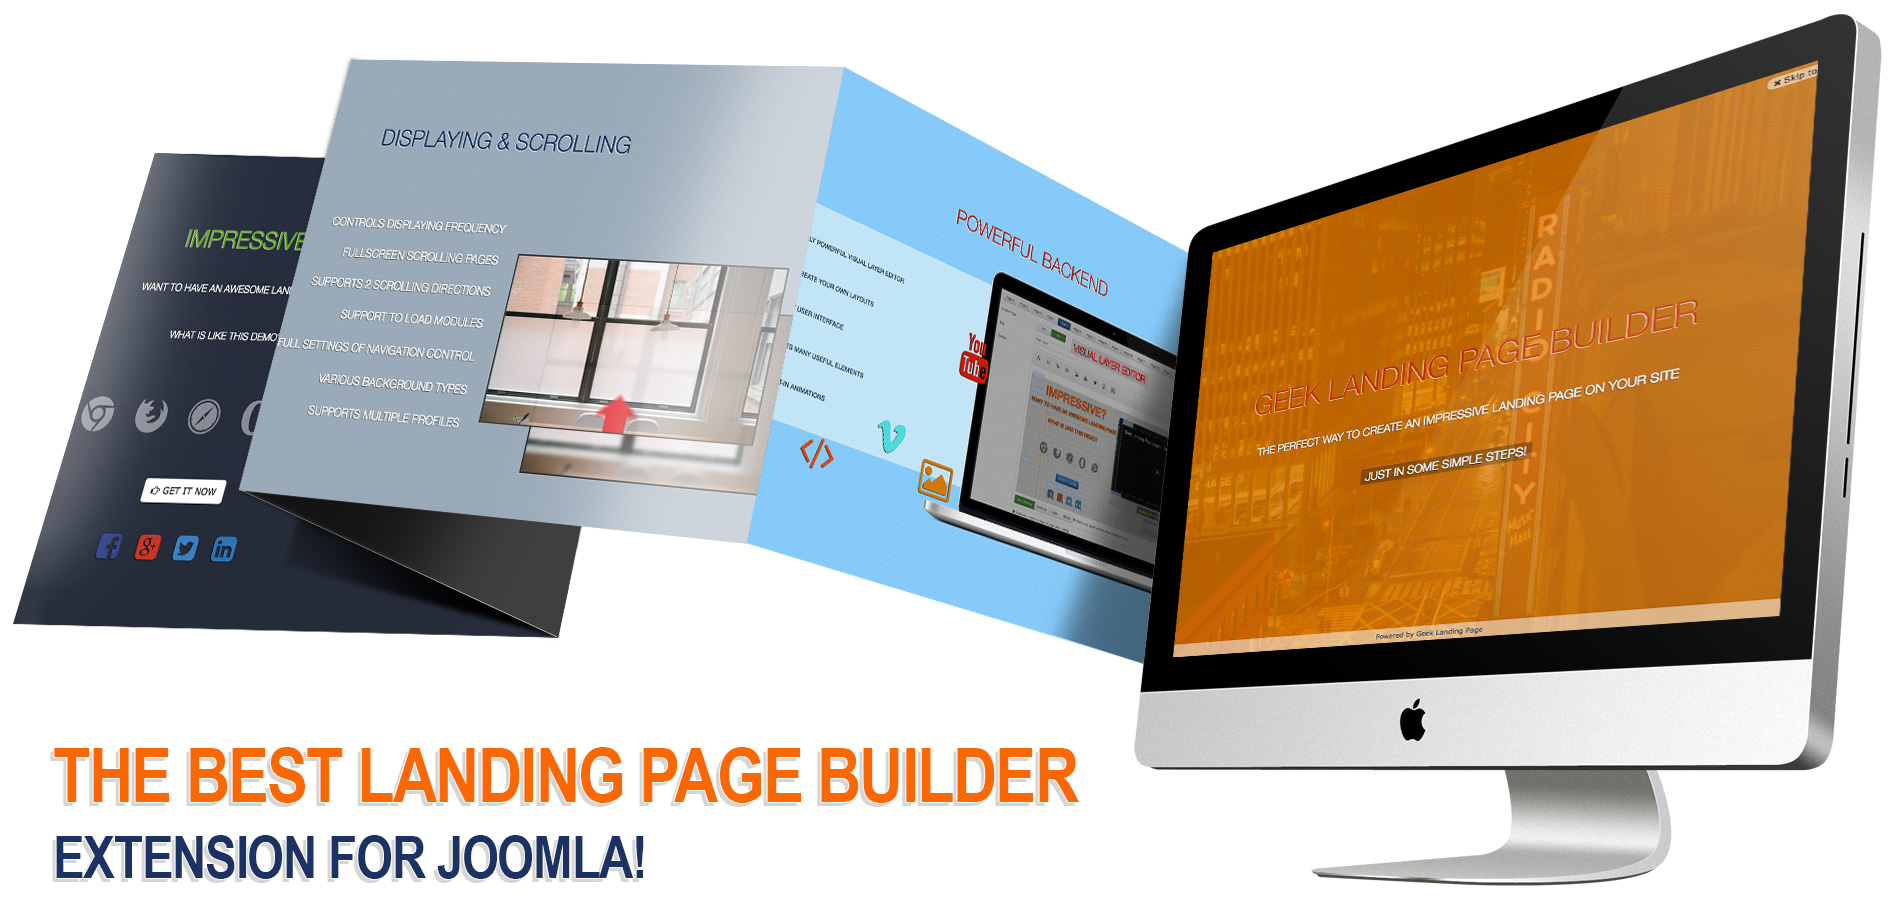 The best Joomla Landing Page Builder extension